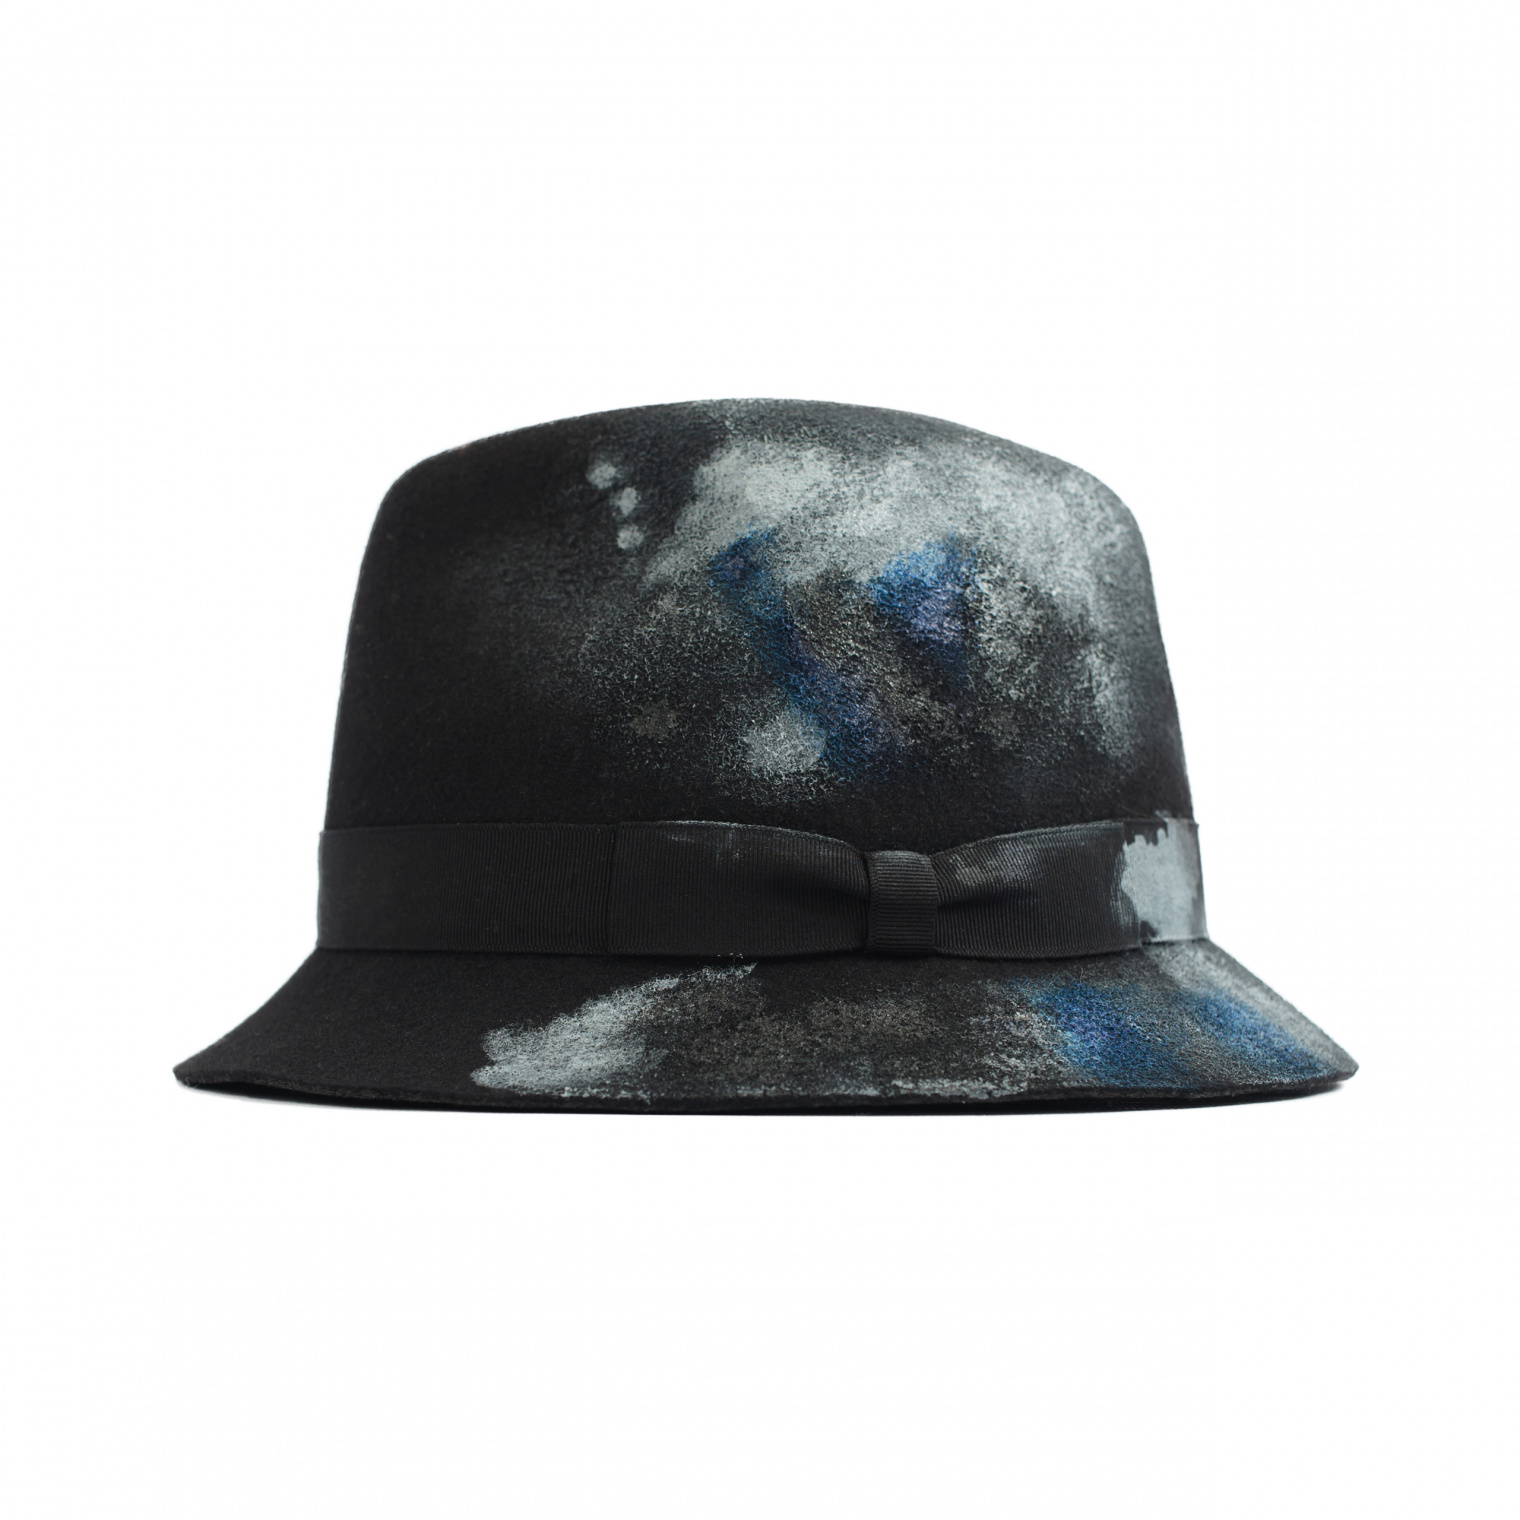 Yohji Yamamoto Black Hat With Paint Marks